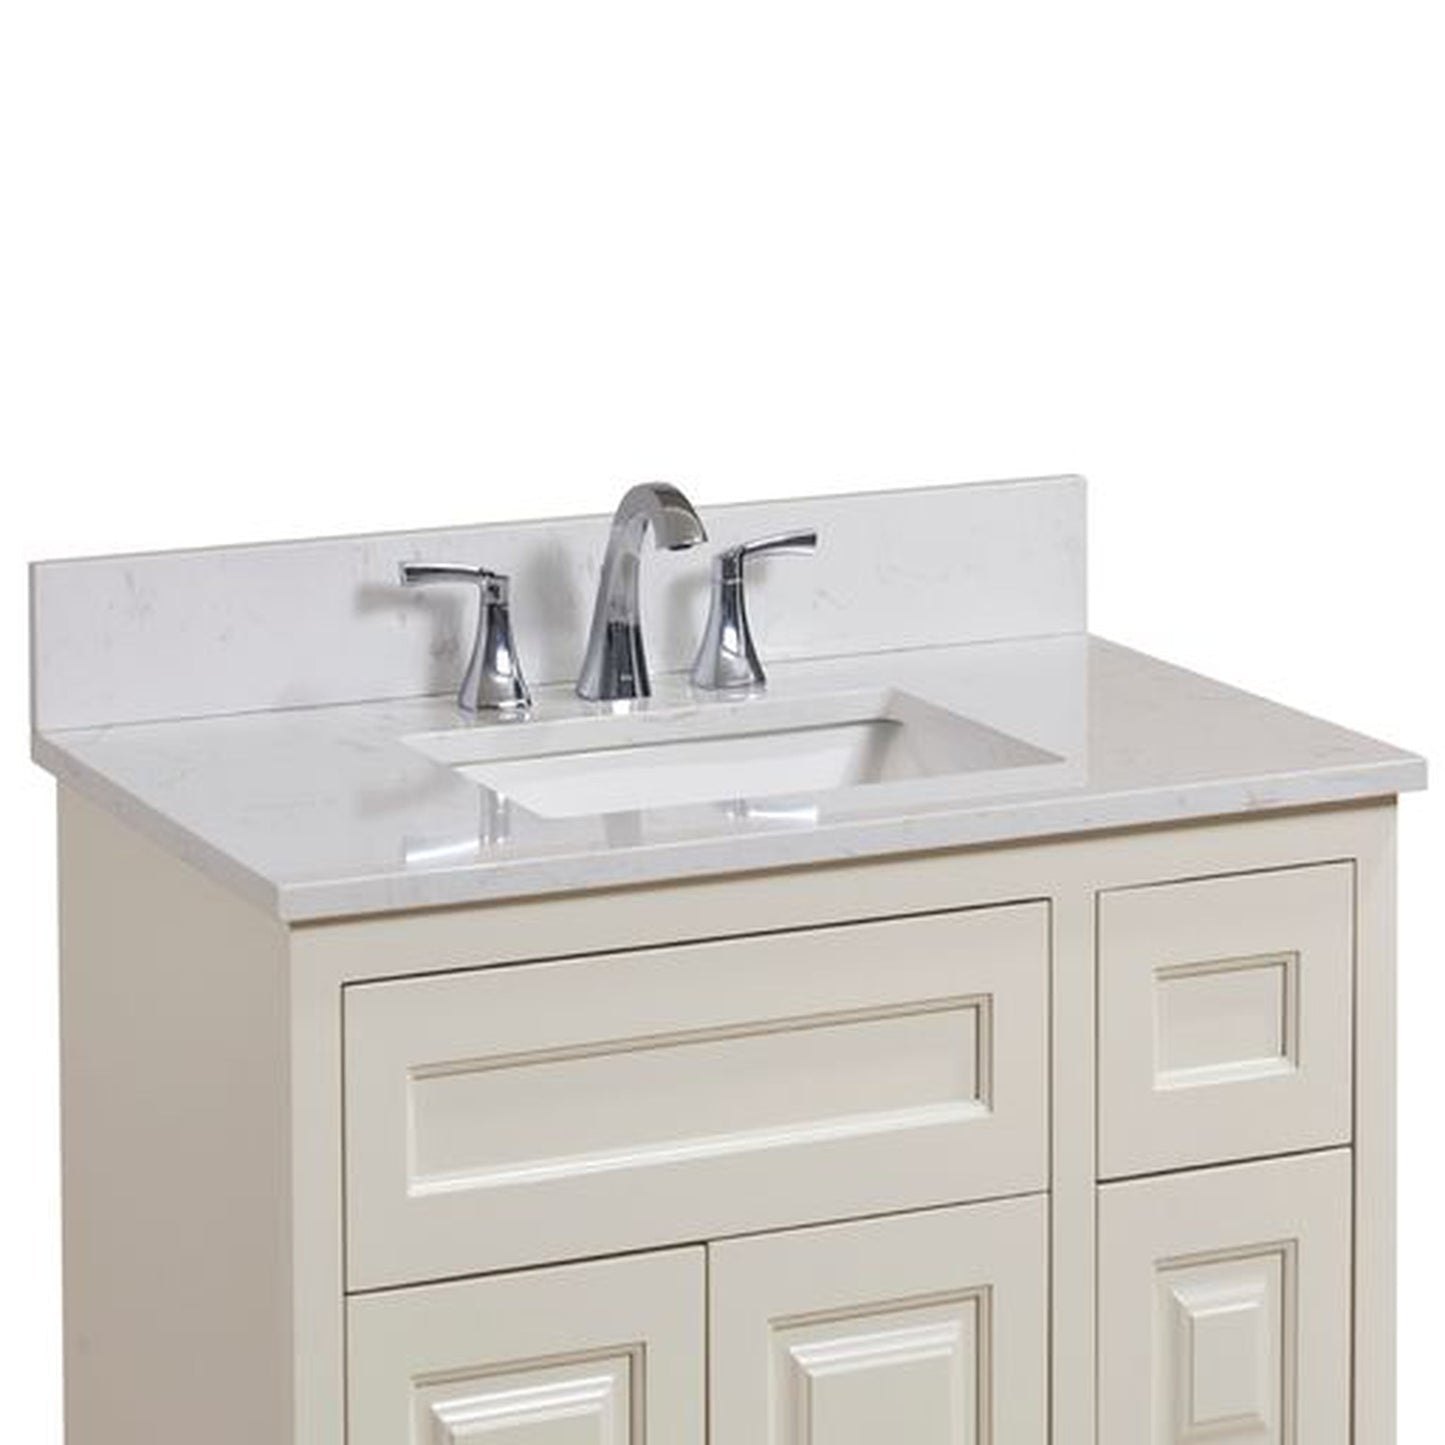 Altair Frosinone 37" x 22" Jazz White Composite Stone Bathroom Vanity Top With White SInk